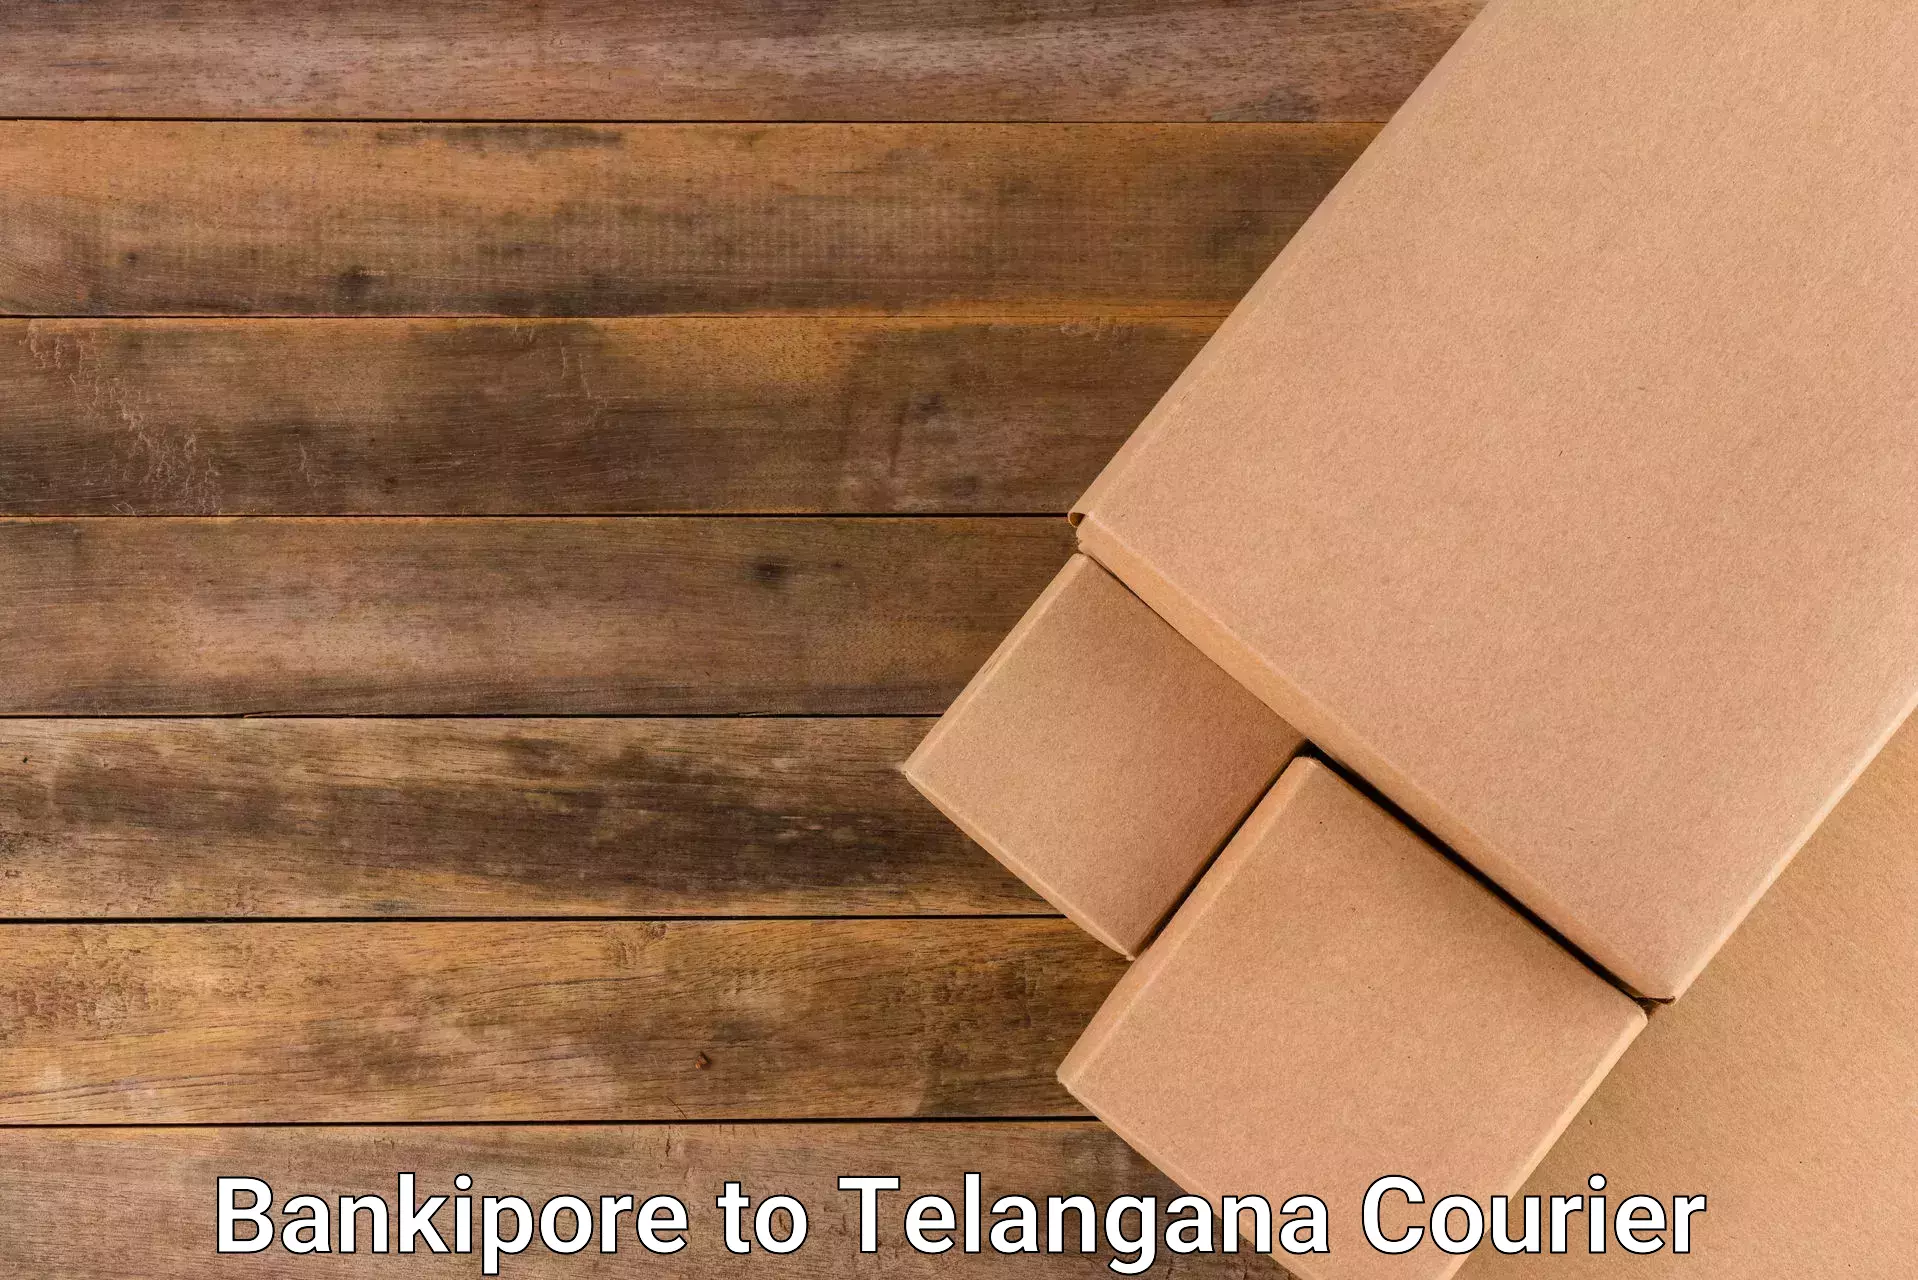 Courier service innovation Bankipore to Vikarabad